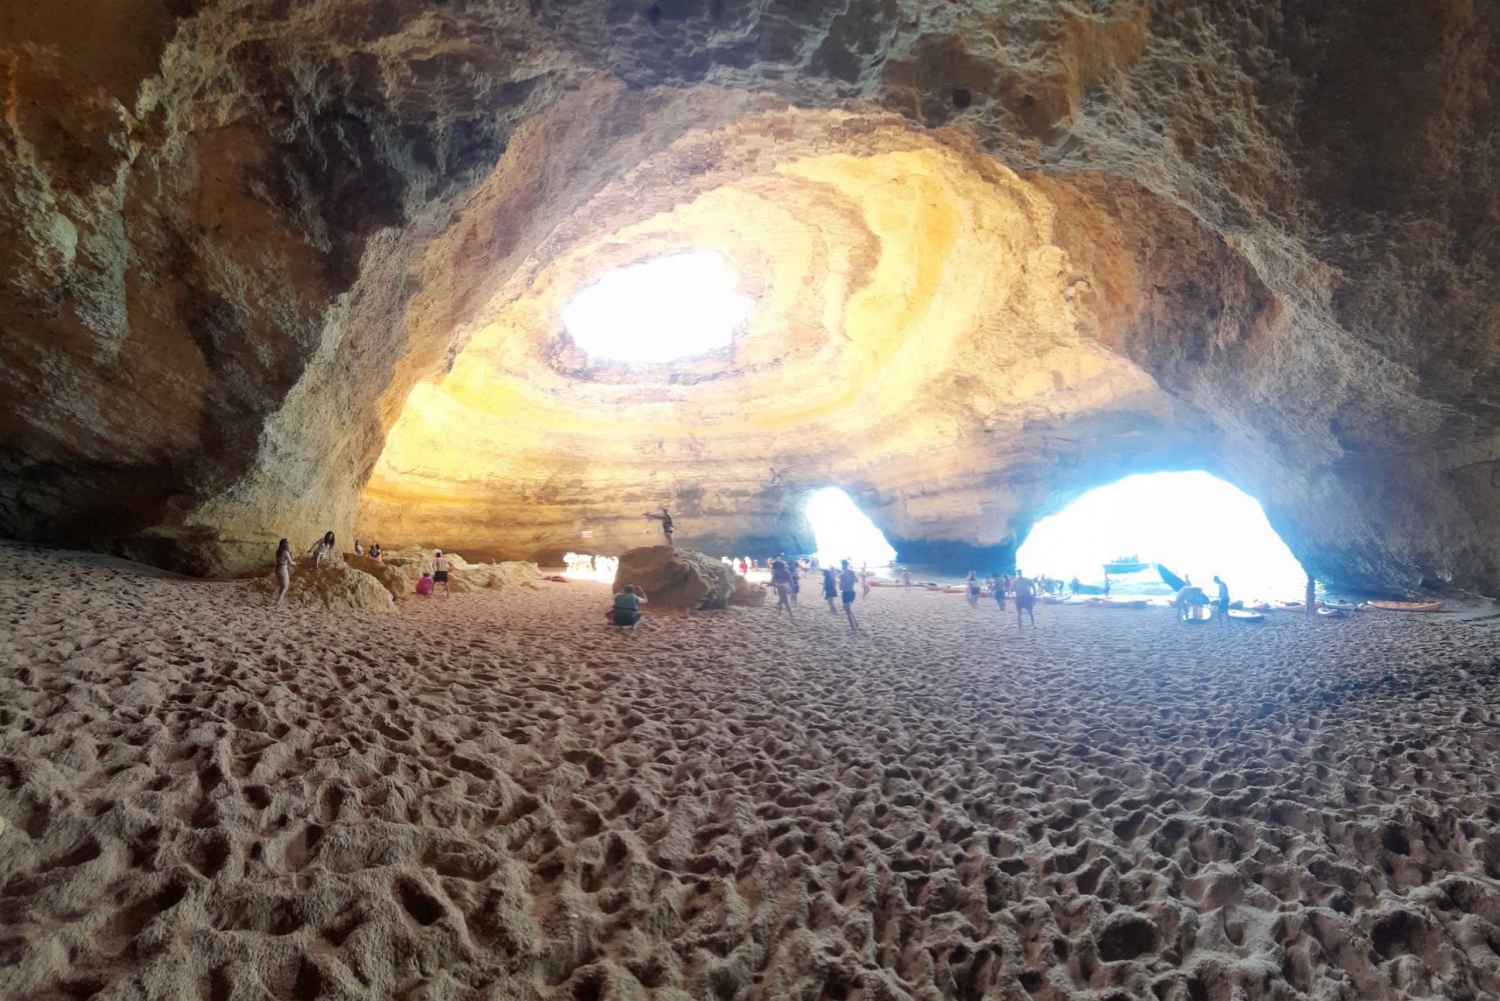 Benagil: Benagil Caves and Secret Spots Guided Kayaking Tour